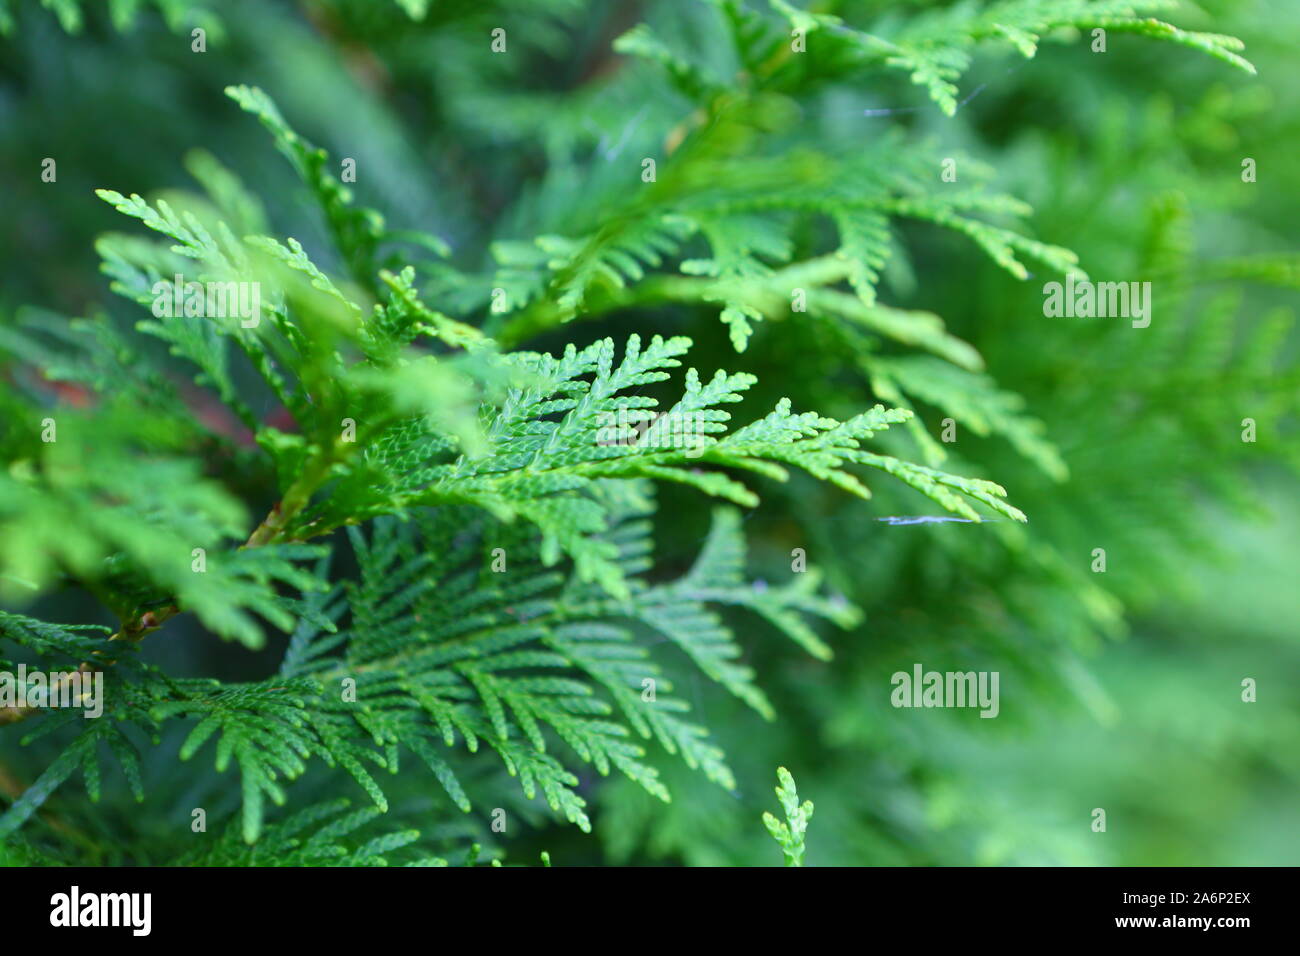 Juniper bush in the garden Stock Photo